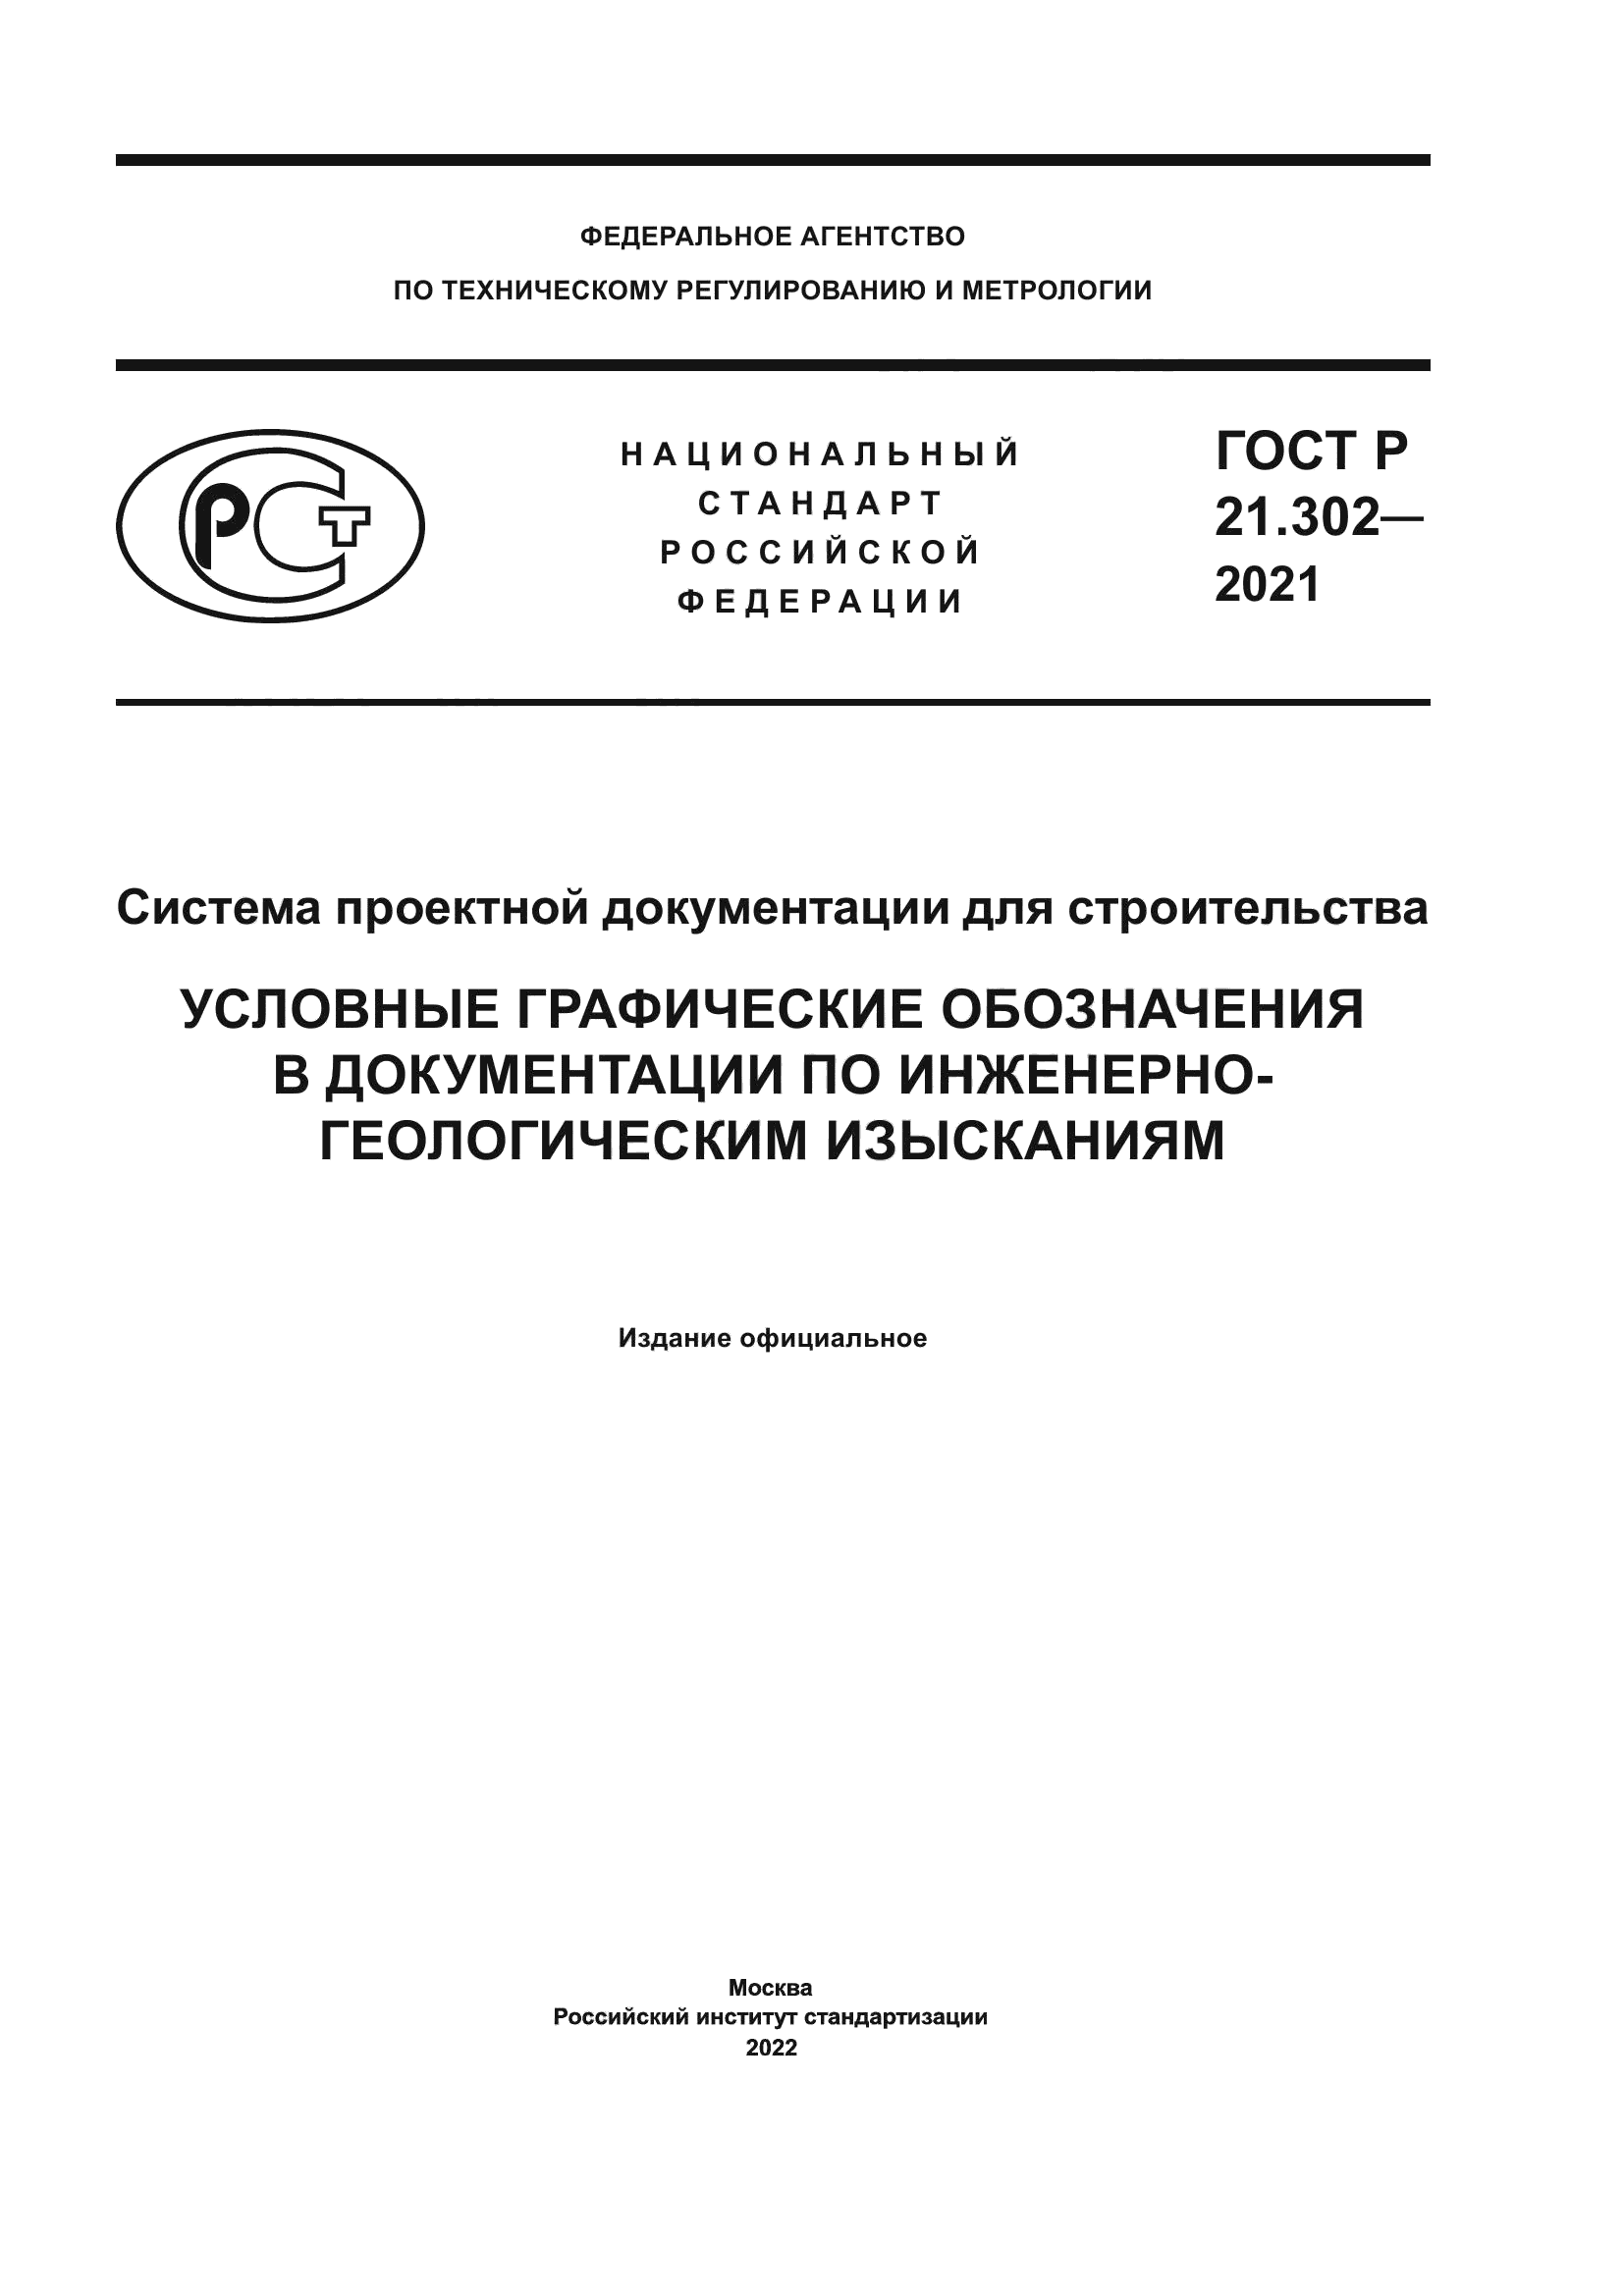 ГОСТ Р 21.302-2021